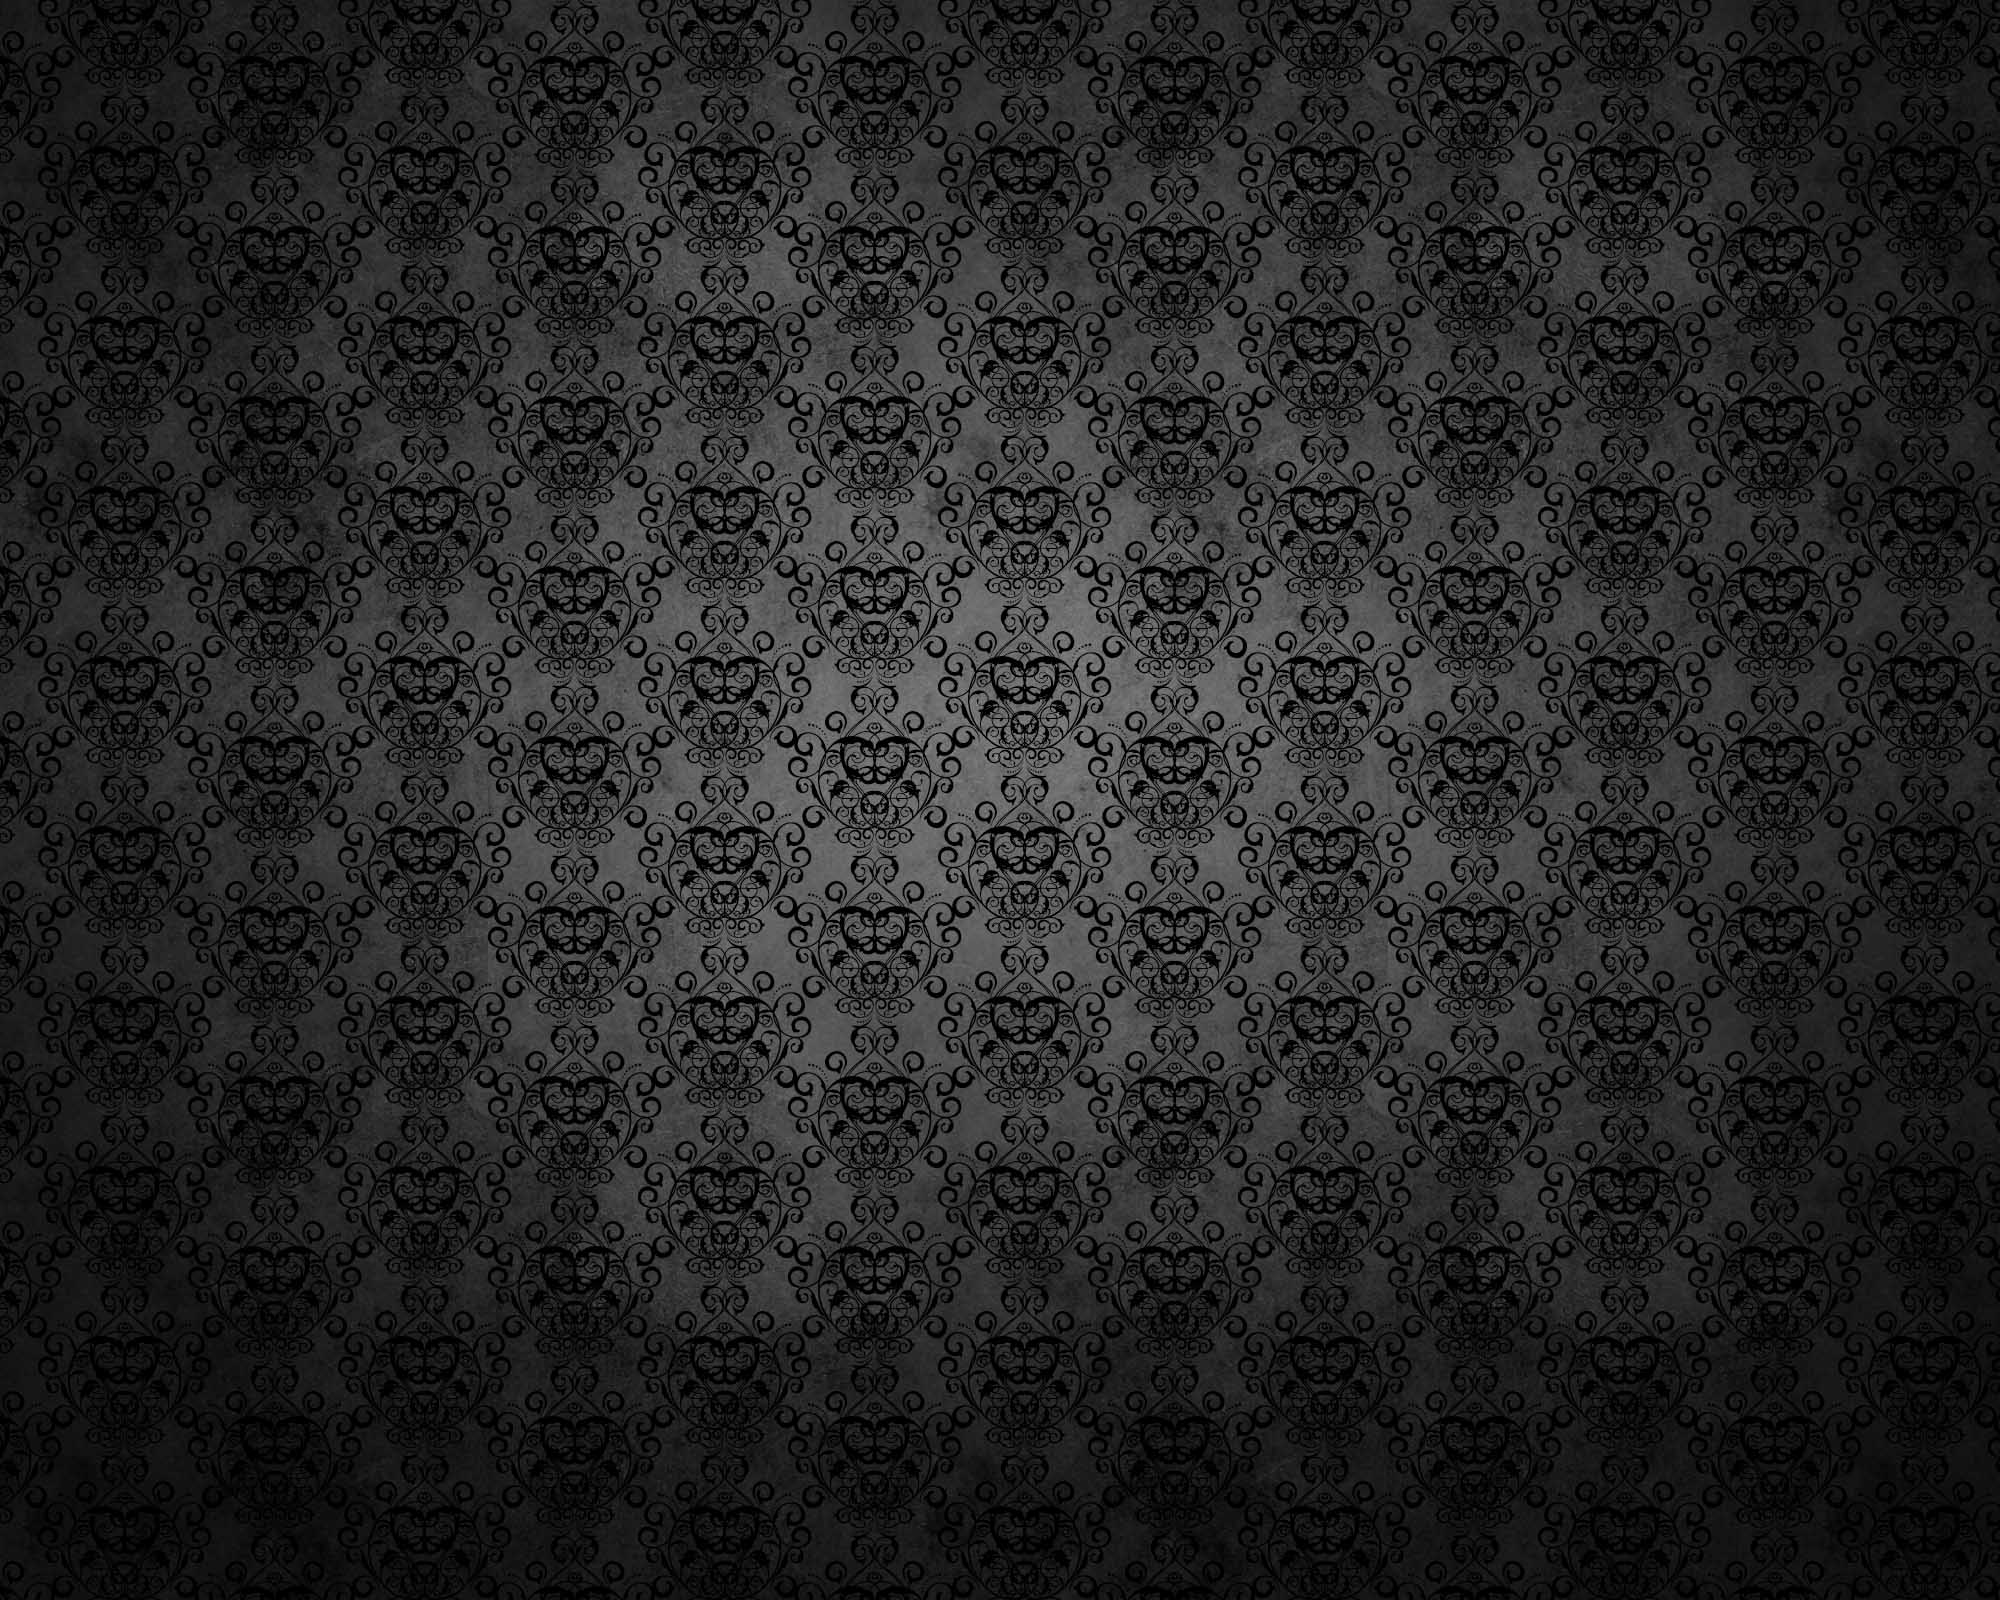 [41+] Vintage Black and White Wallpaper | WallpaperSafari.com